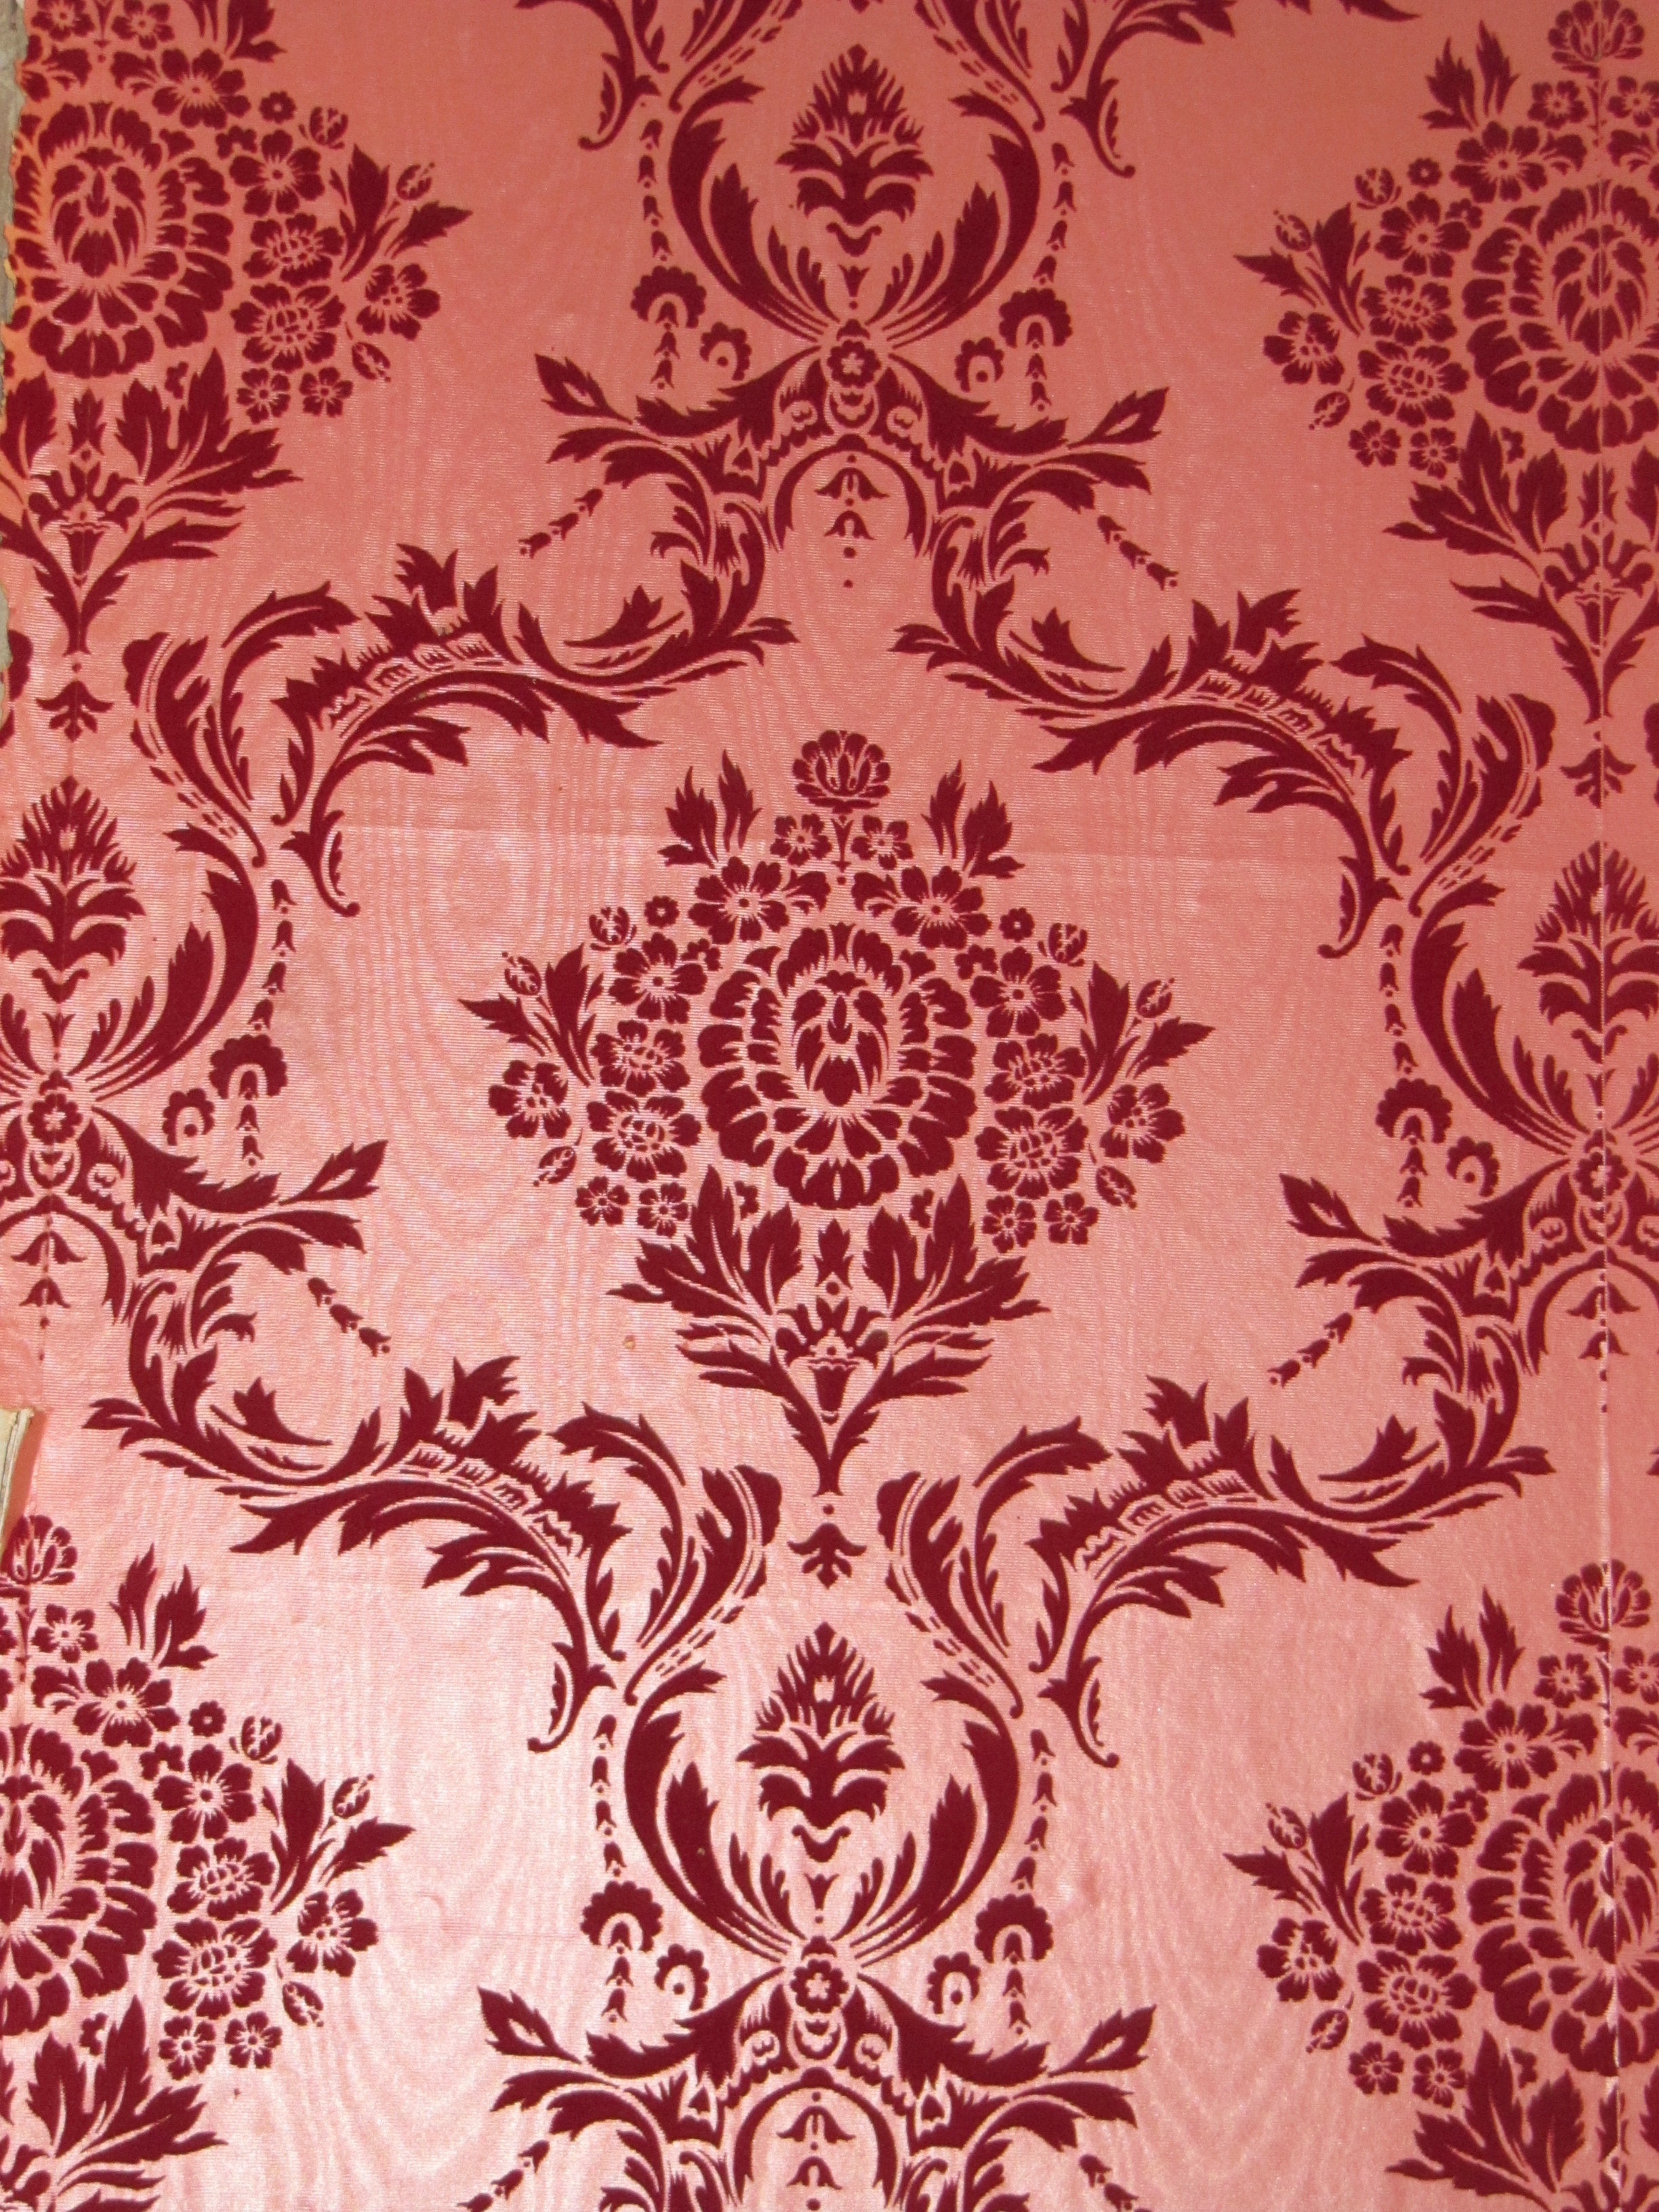 18th Century Wallpaper Designs 2448x3264